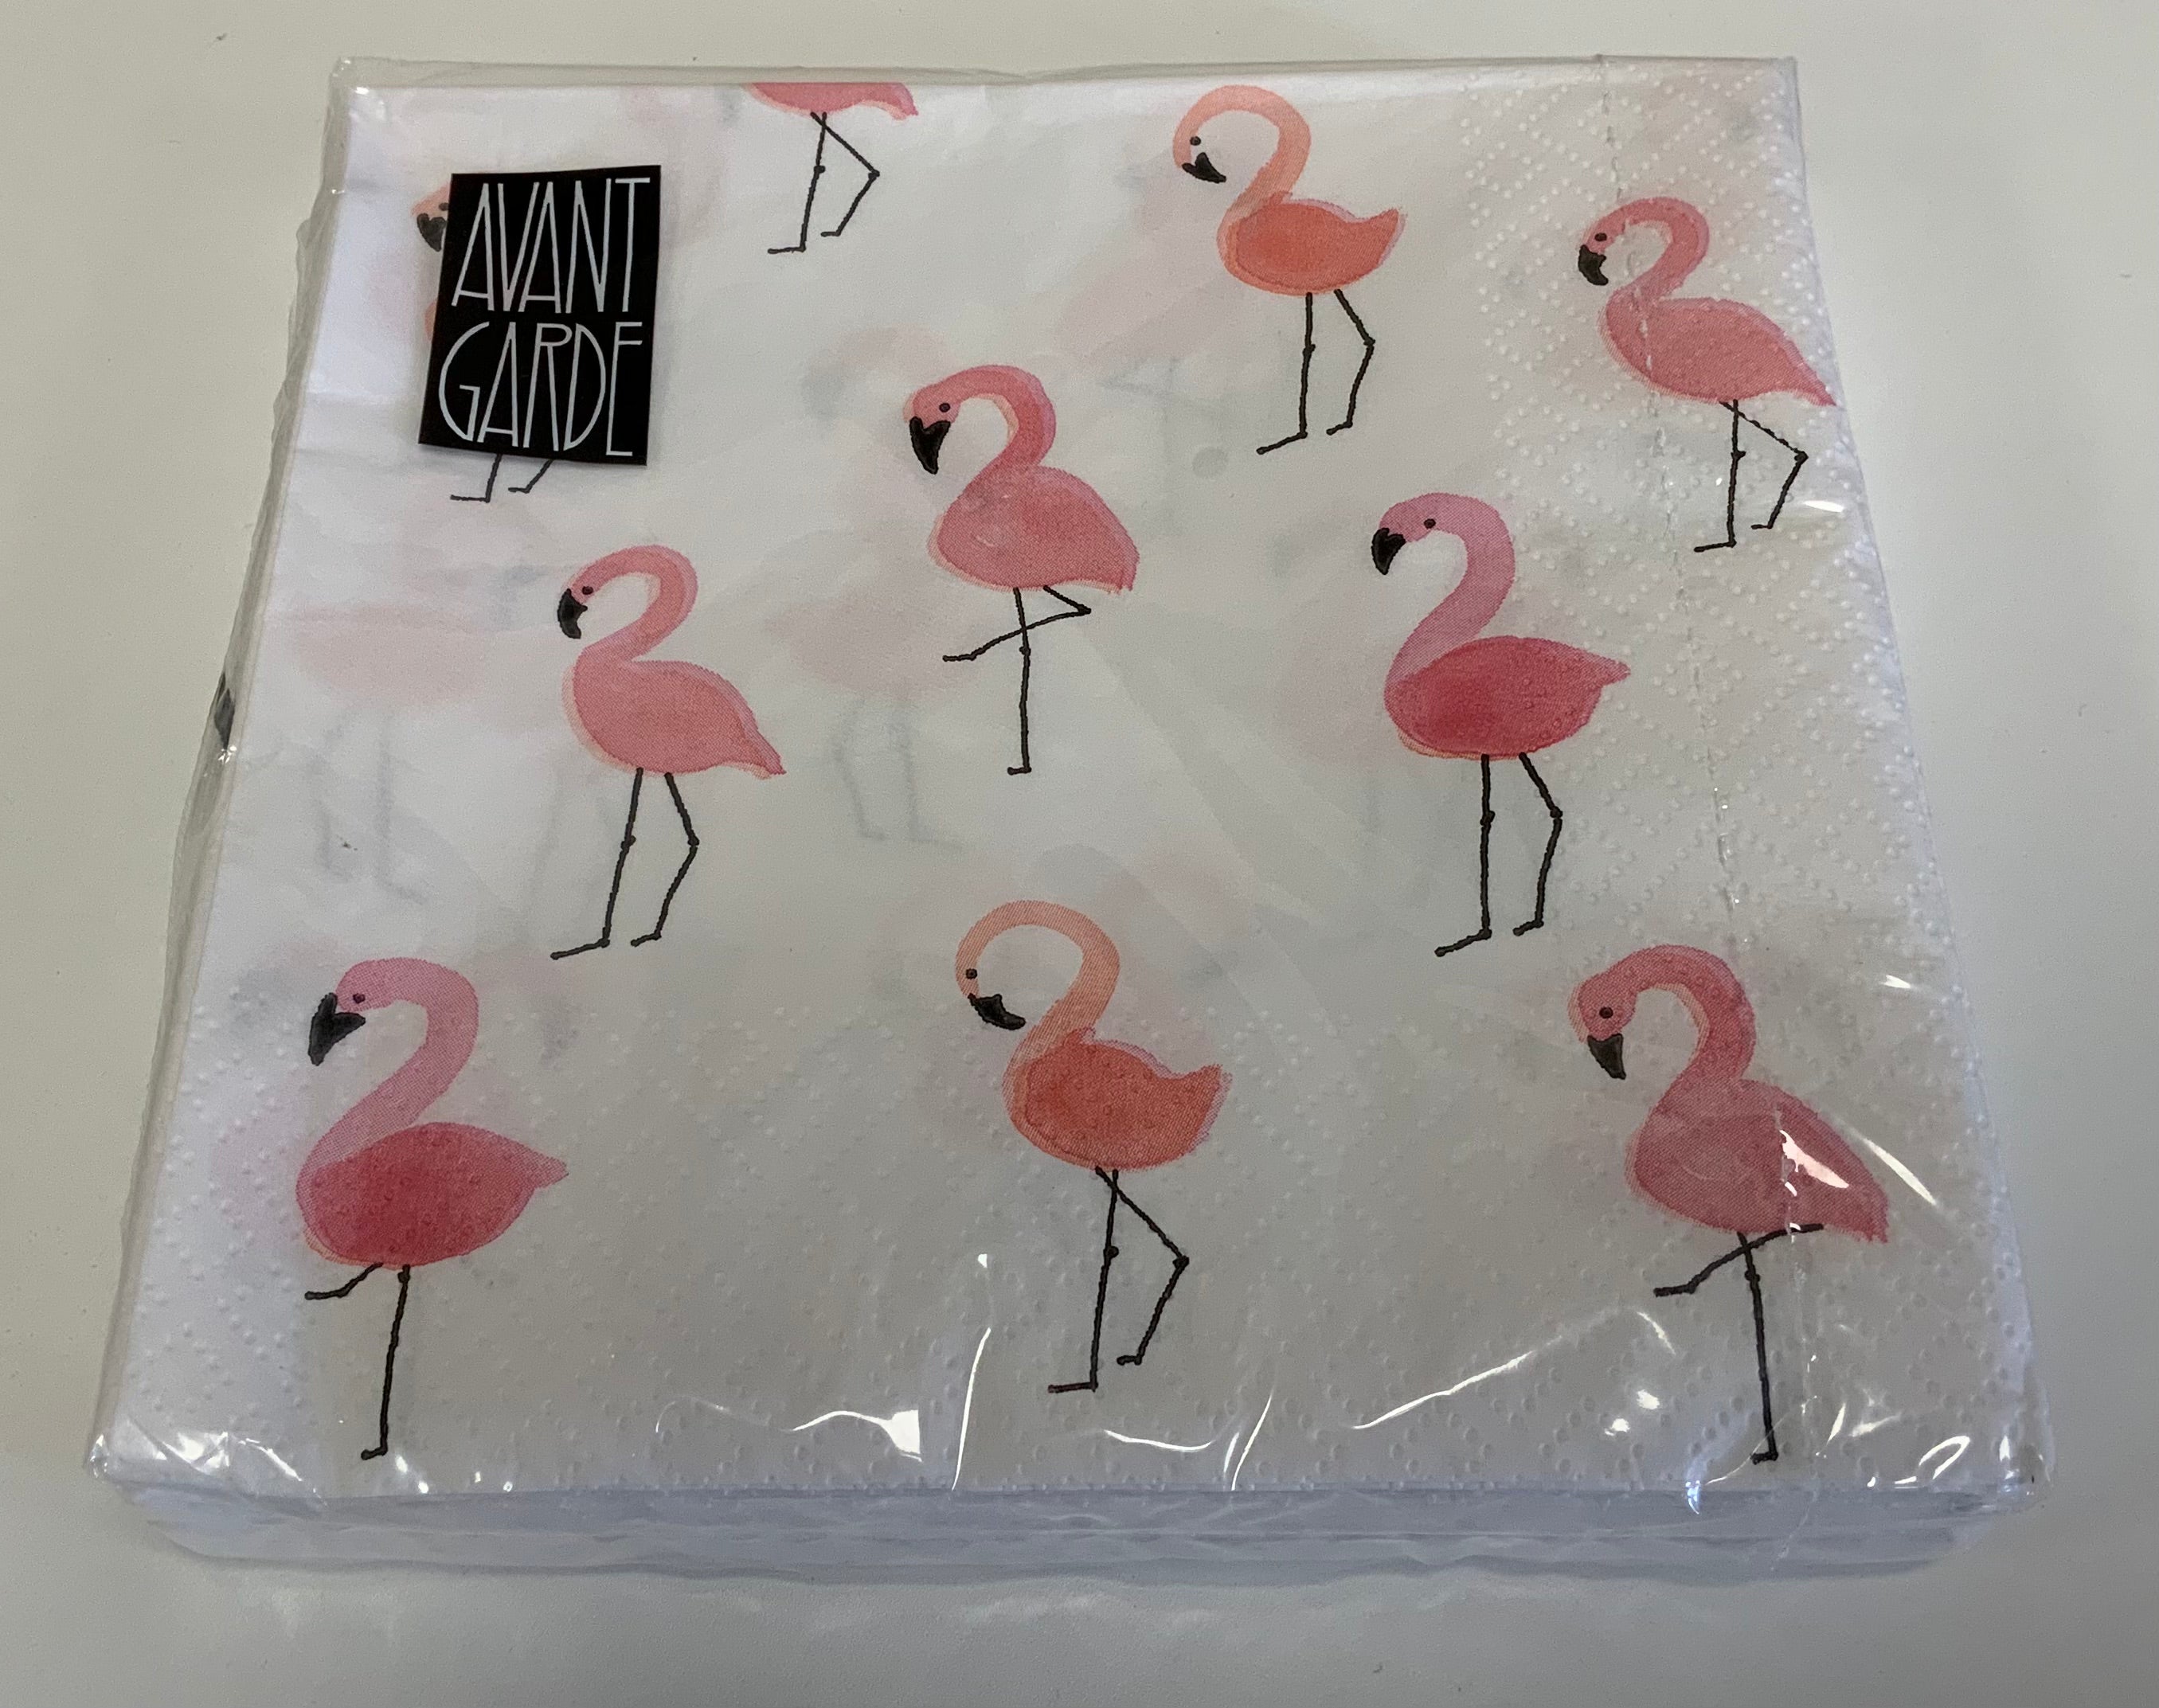 Flamingo napkins